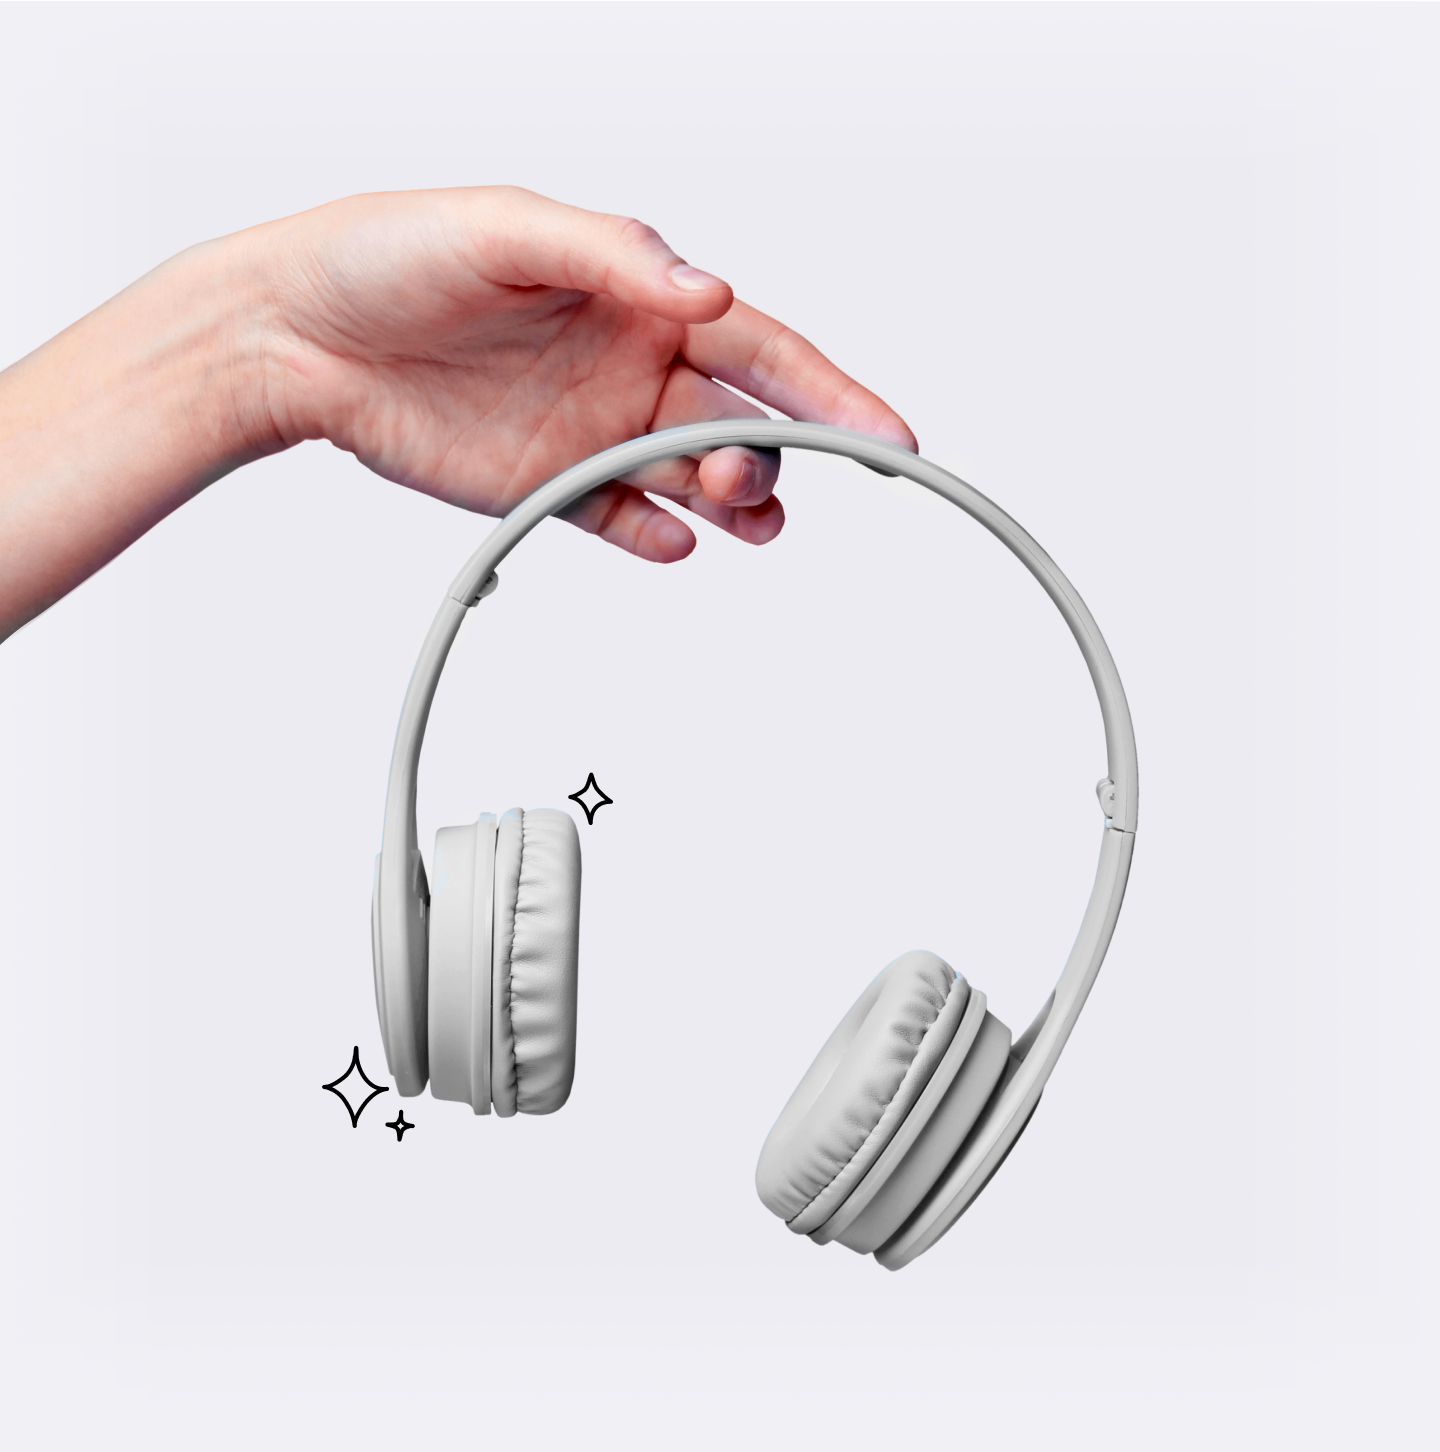 Hand holding repaired headphones